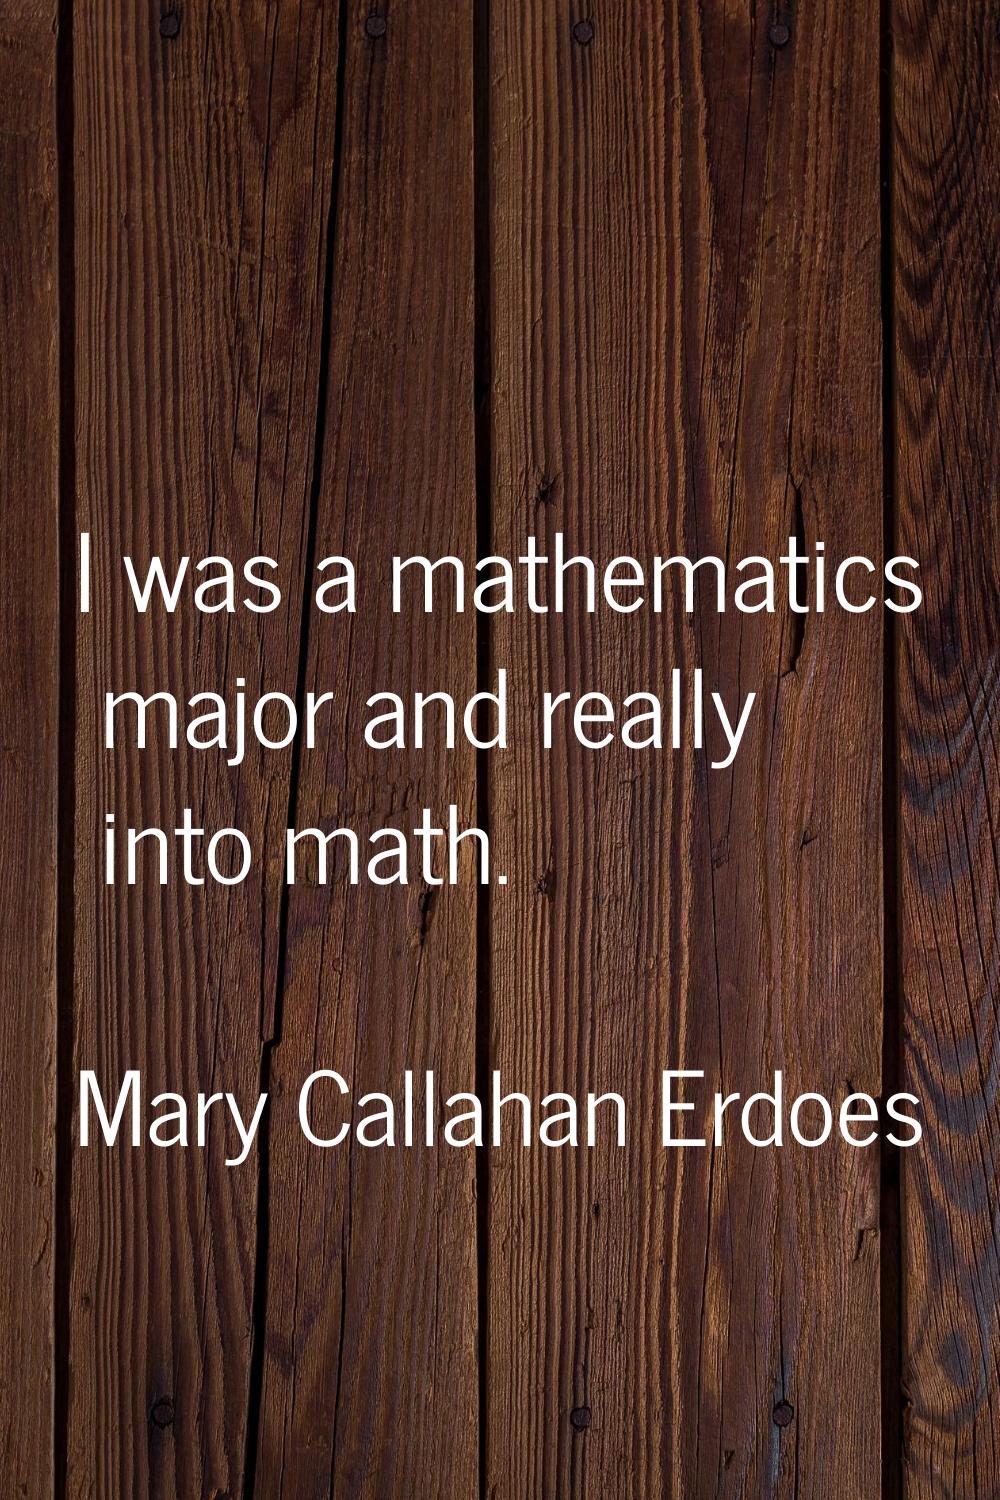 I was a mathematics major and really into math.